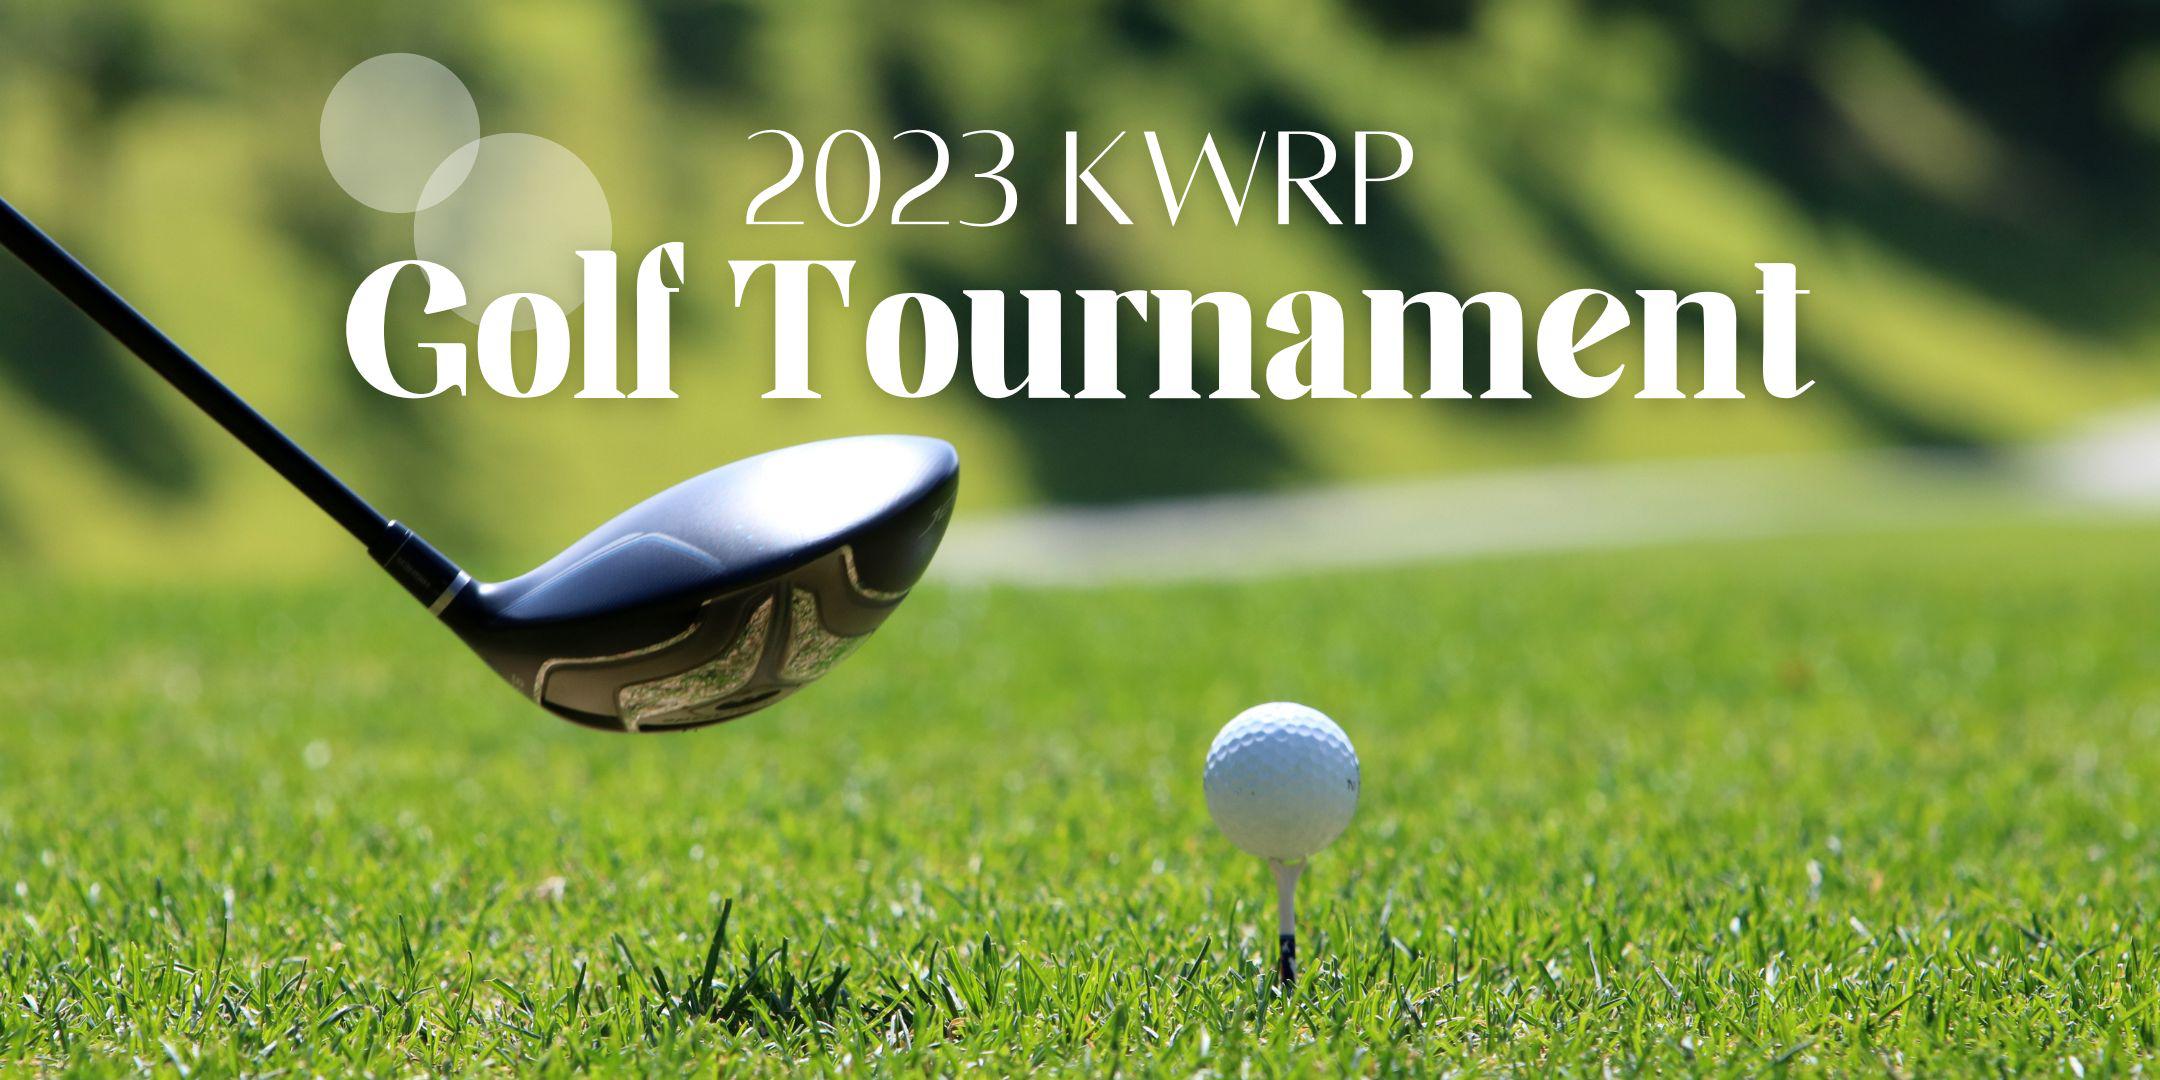 RSVP KWRP Golf Tournament